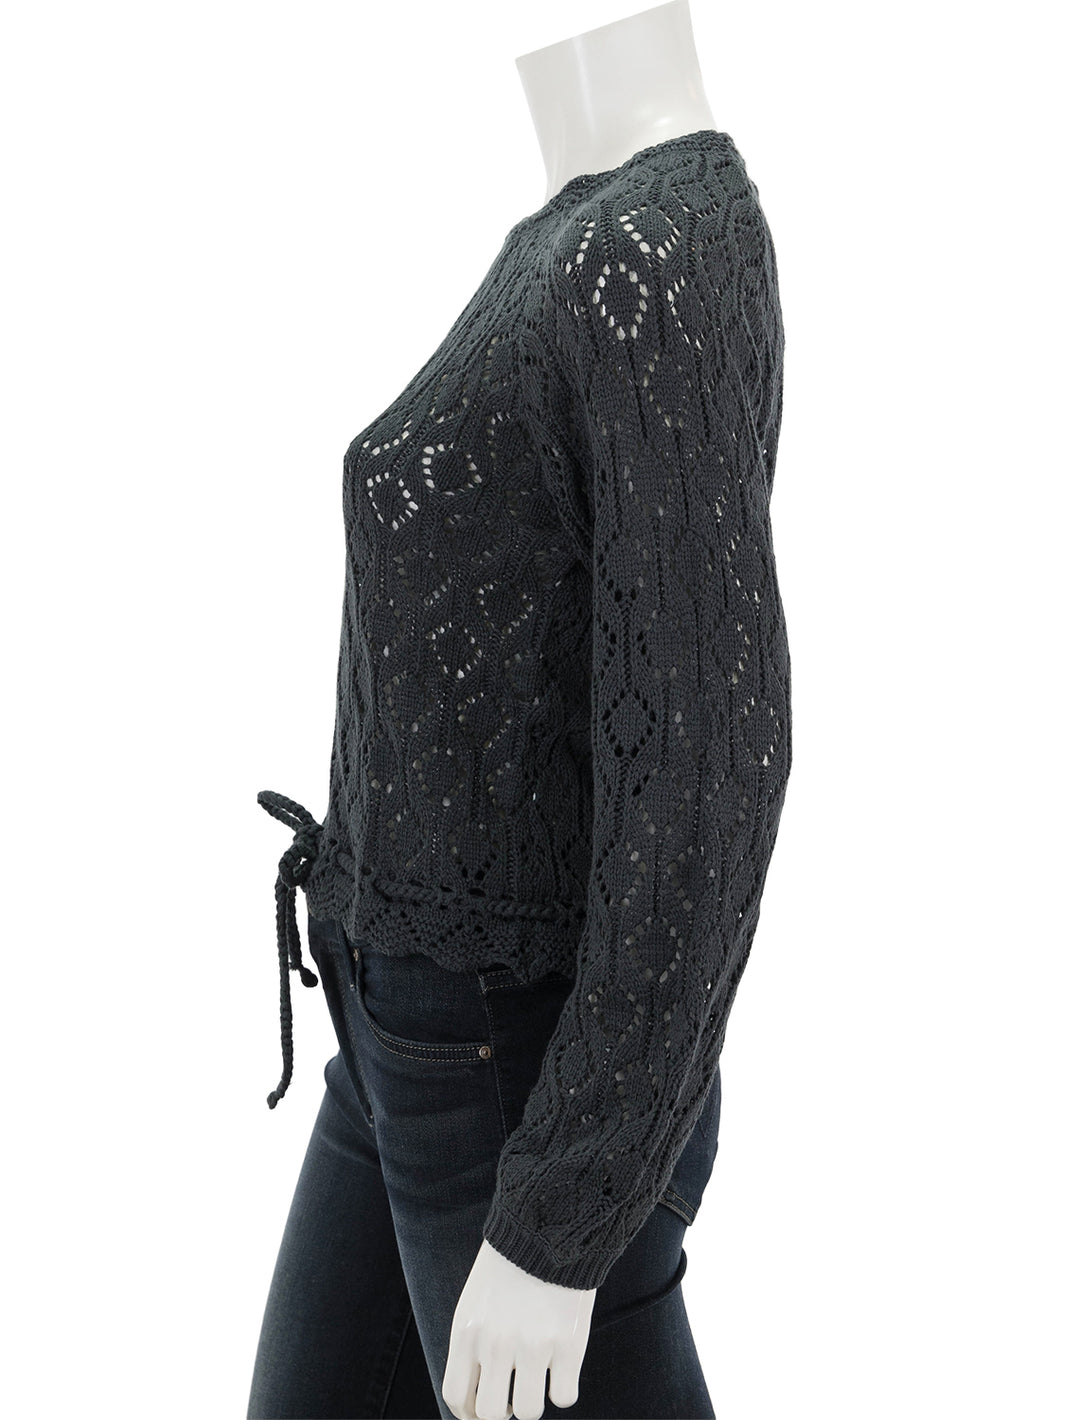 Side view of Marine Layer's manazanita crochet fringe sweater in black.